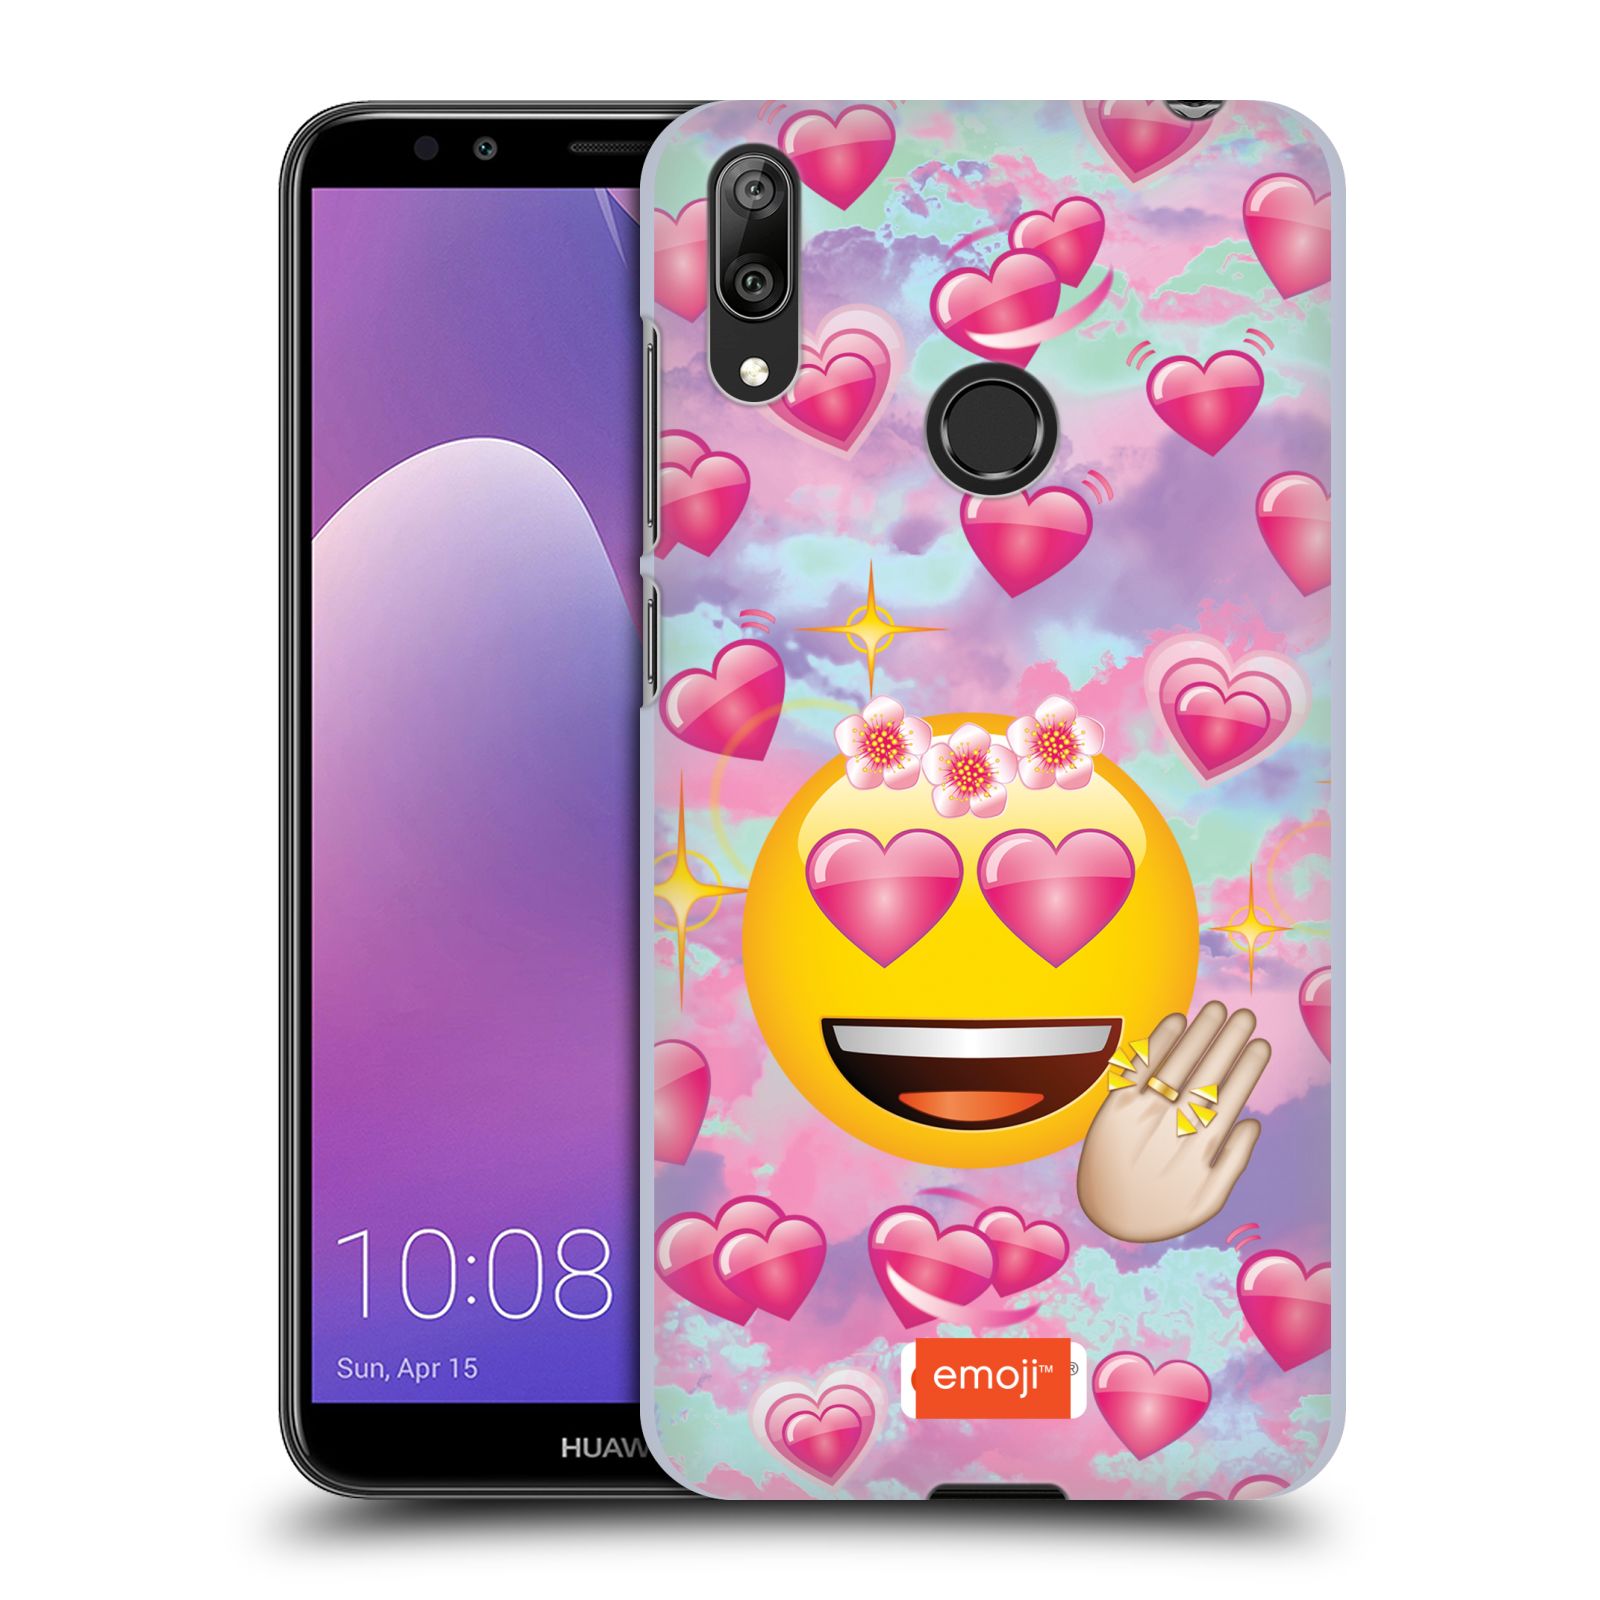 Pouzdro na mobil Huawei Y7 2019 - Head Case - smajlík oficiální kryt EMOJI velký smajlík růžová srdíčka